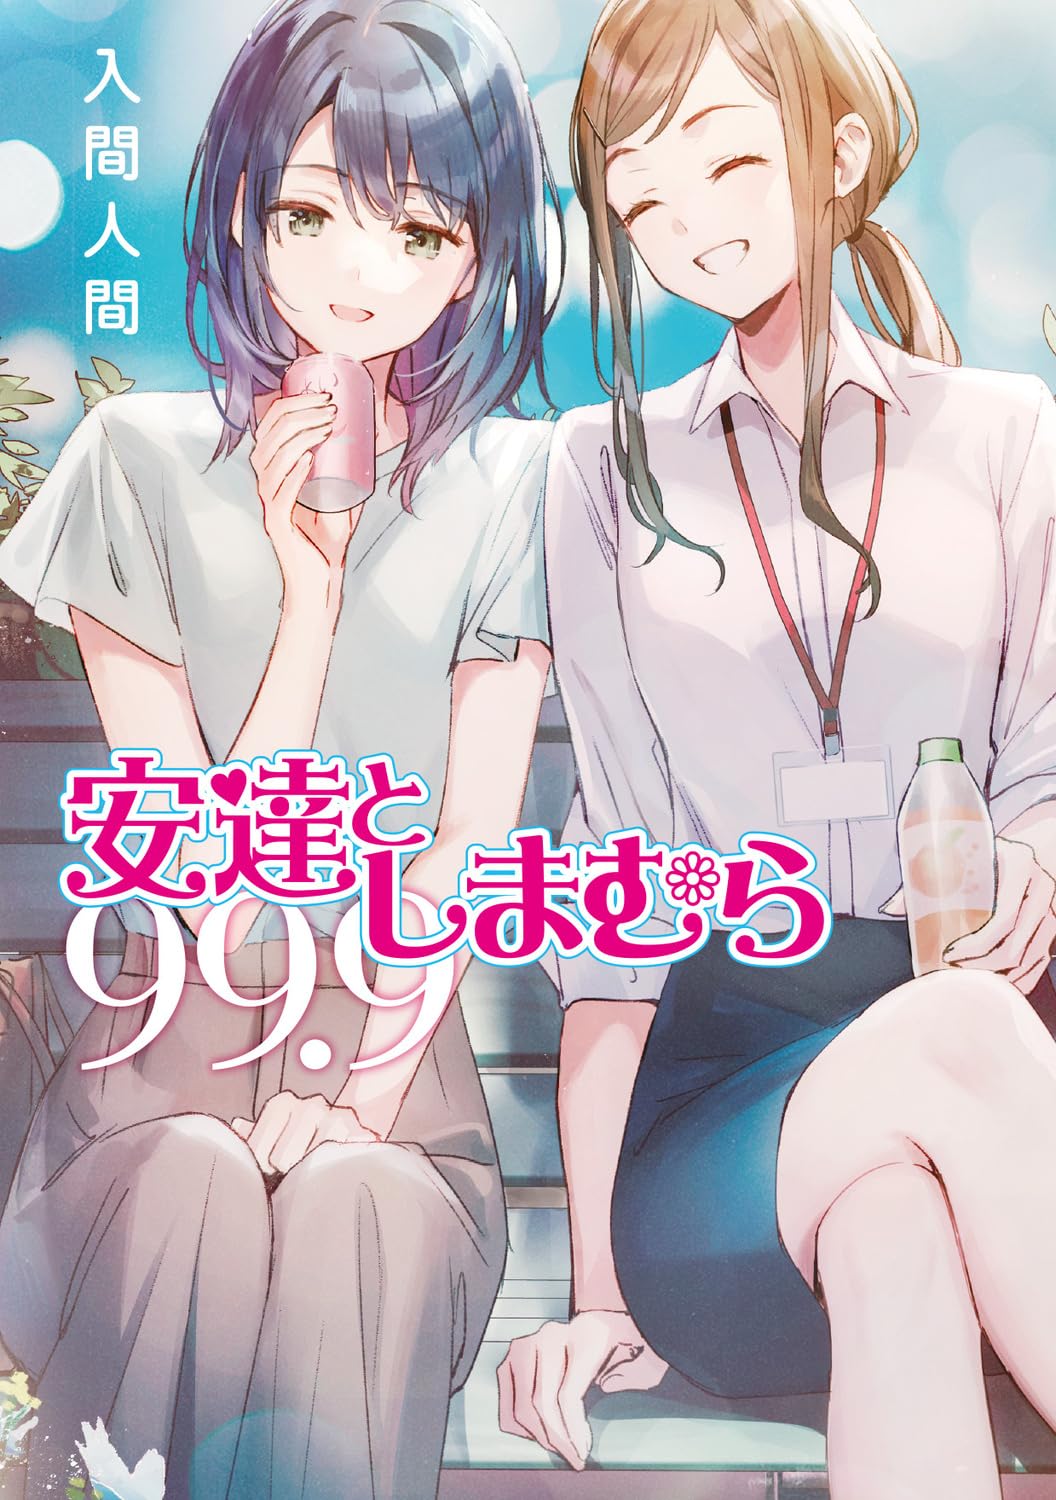 Adachi to Shimamura: Novel yuri termina ao 12º volume